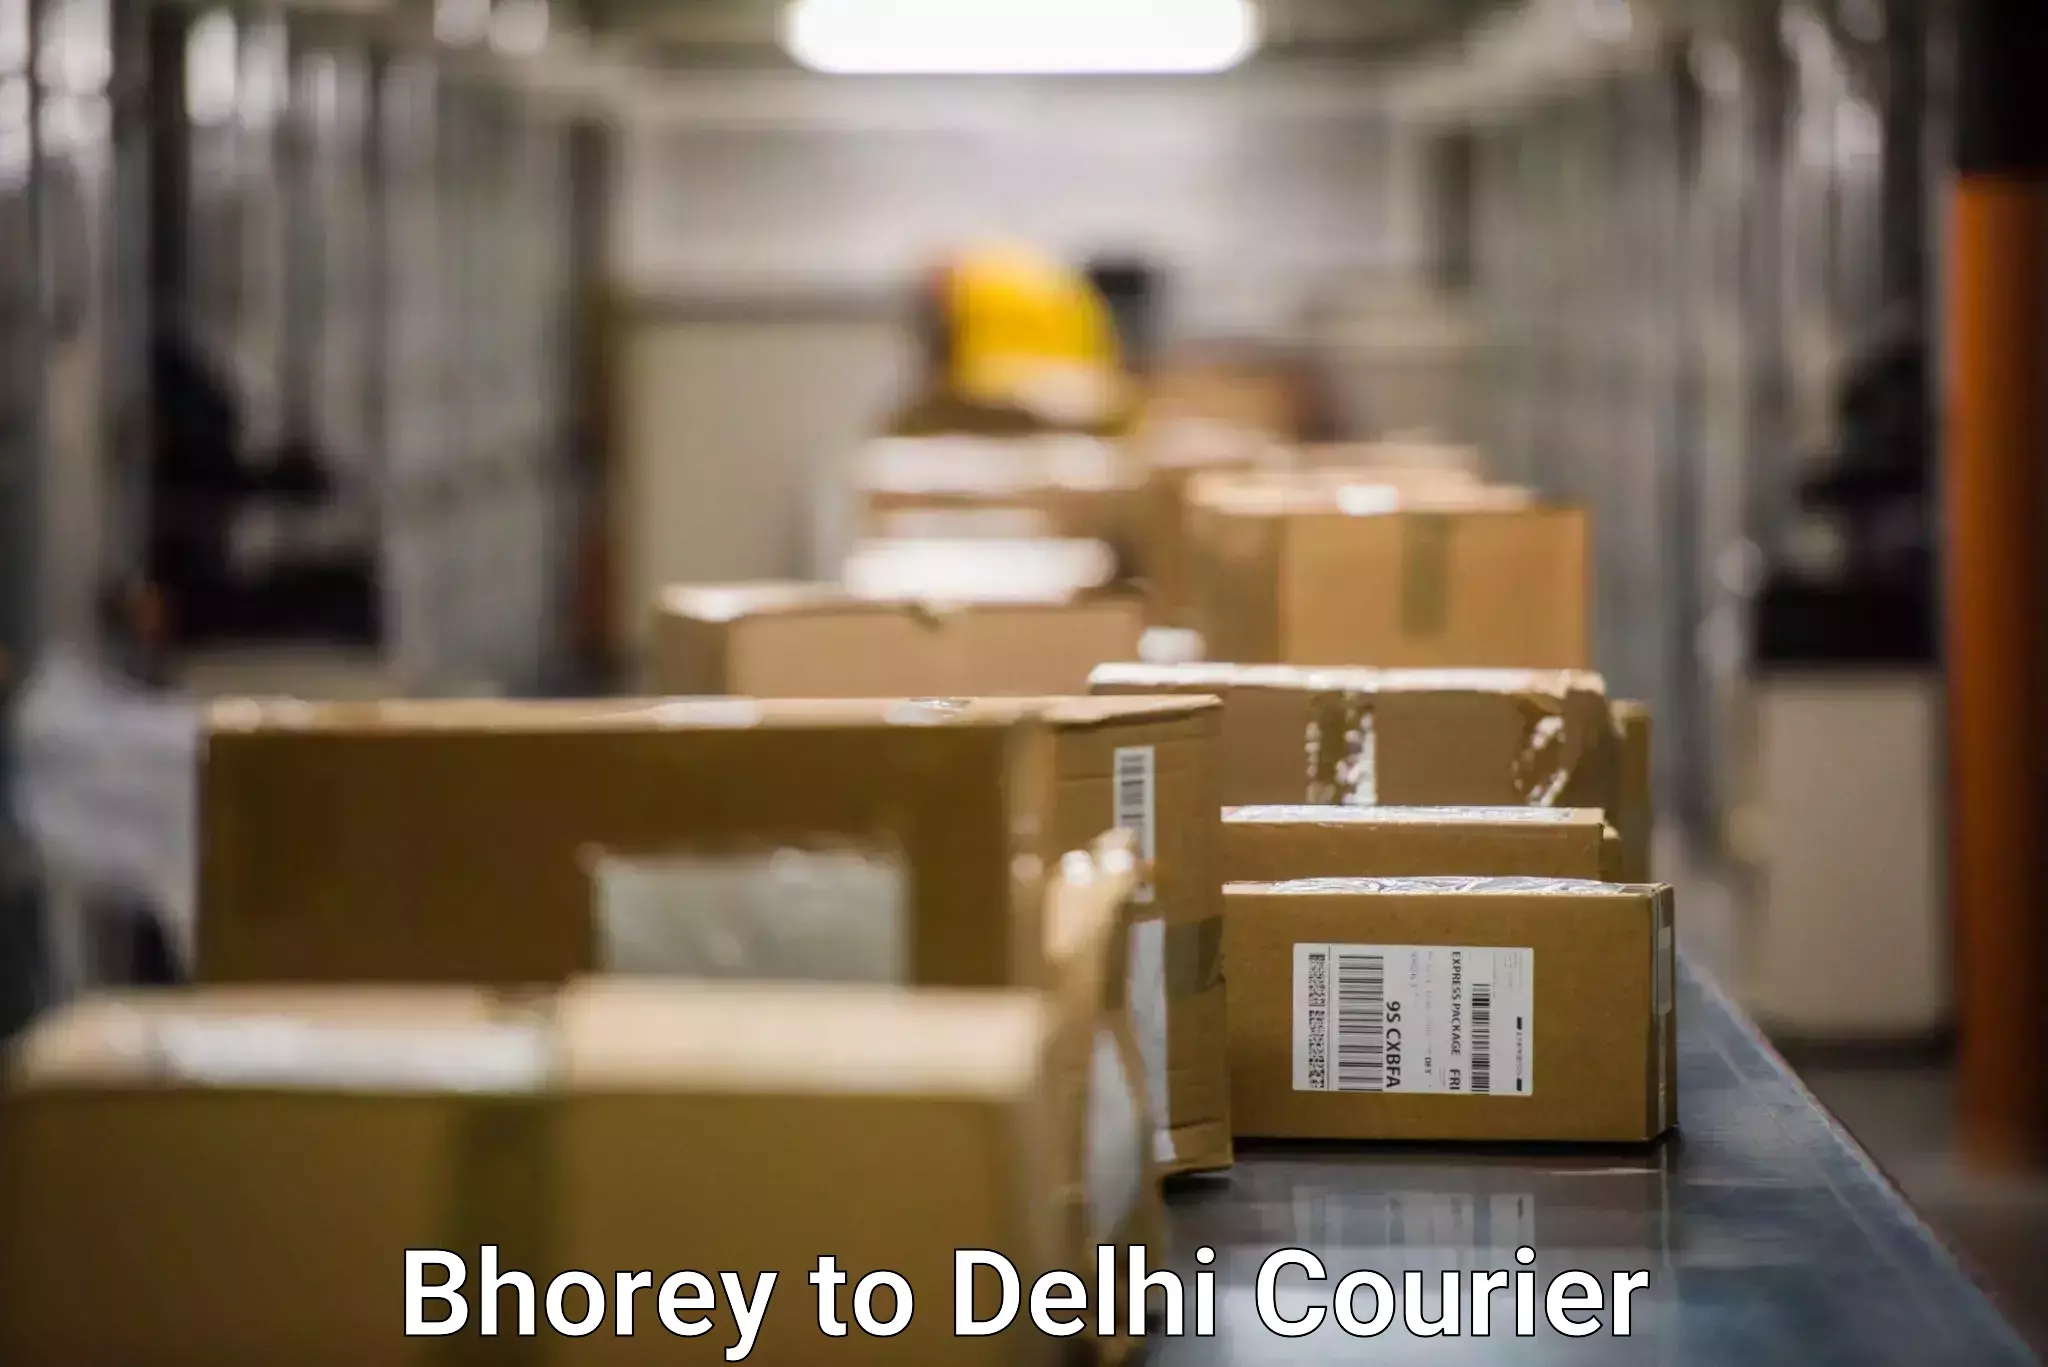 Courier service comparison Bhorey to Ramesh Nagar